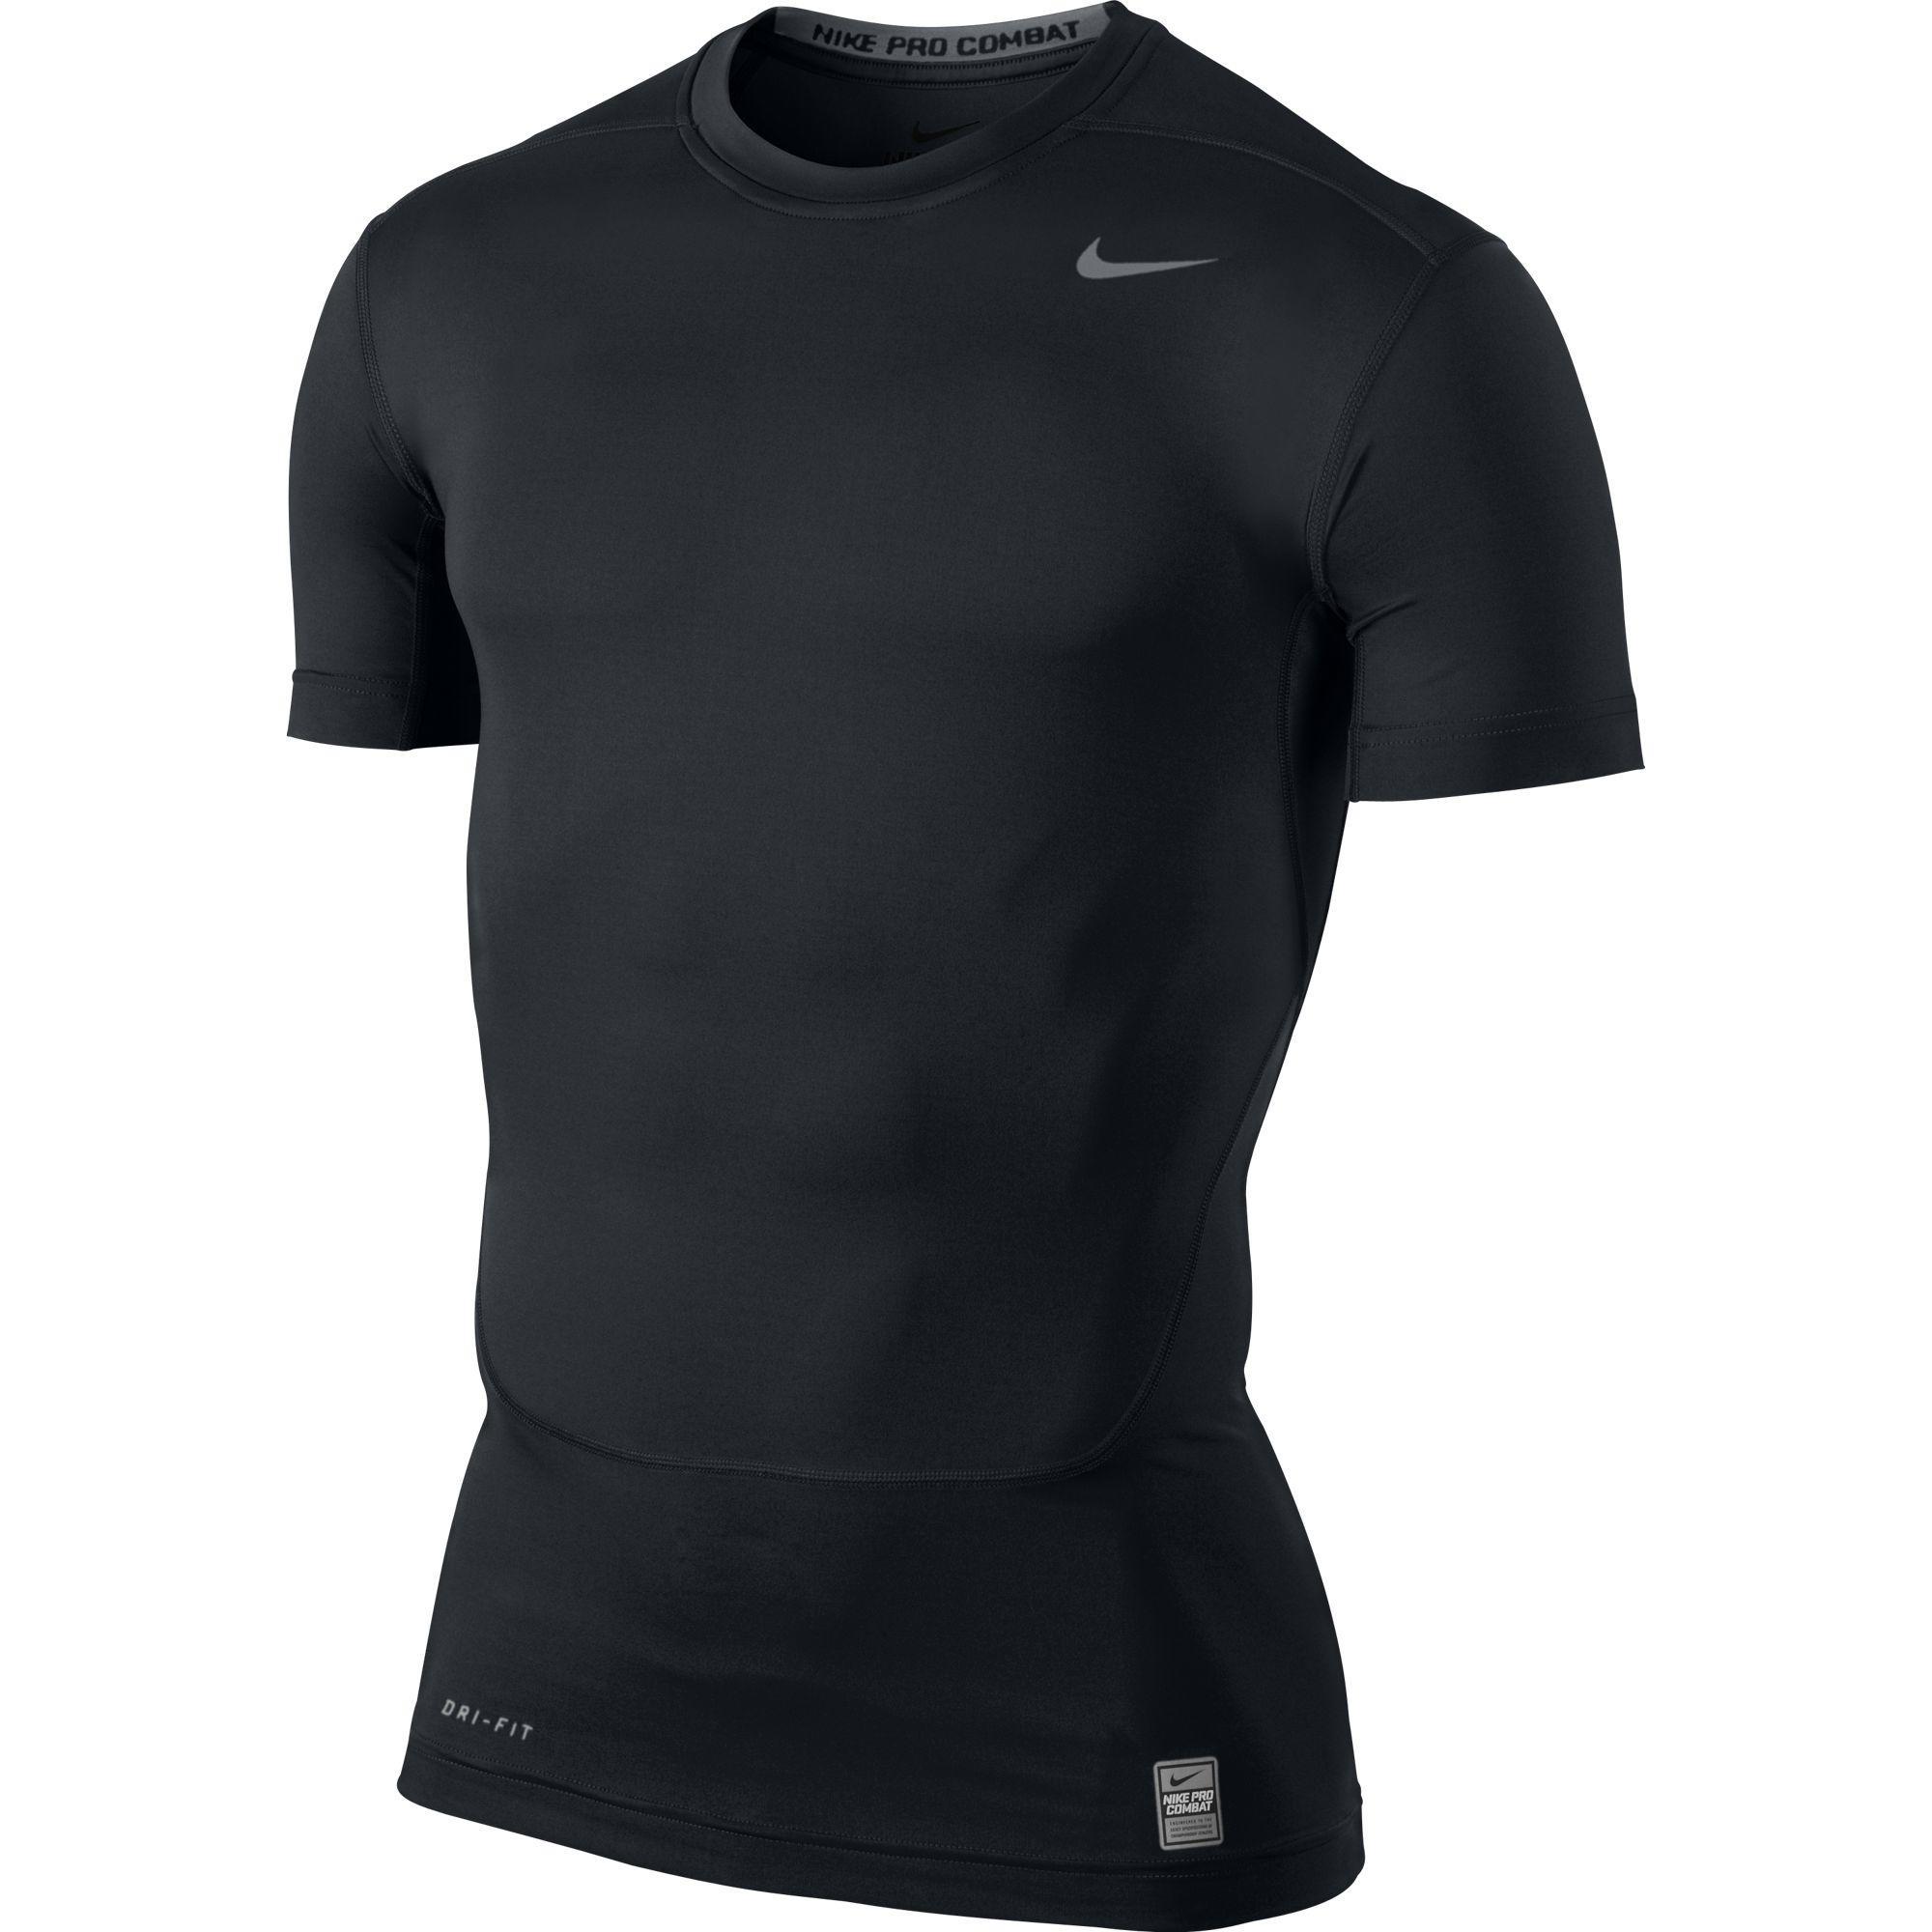 Nike Pro 2.0 Short Sleeve Shirt - Black/Cool Grey -